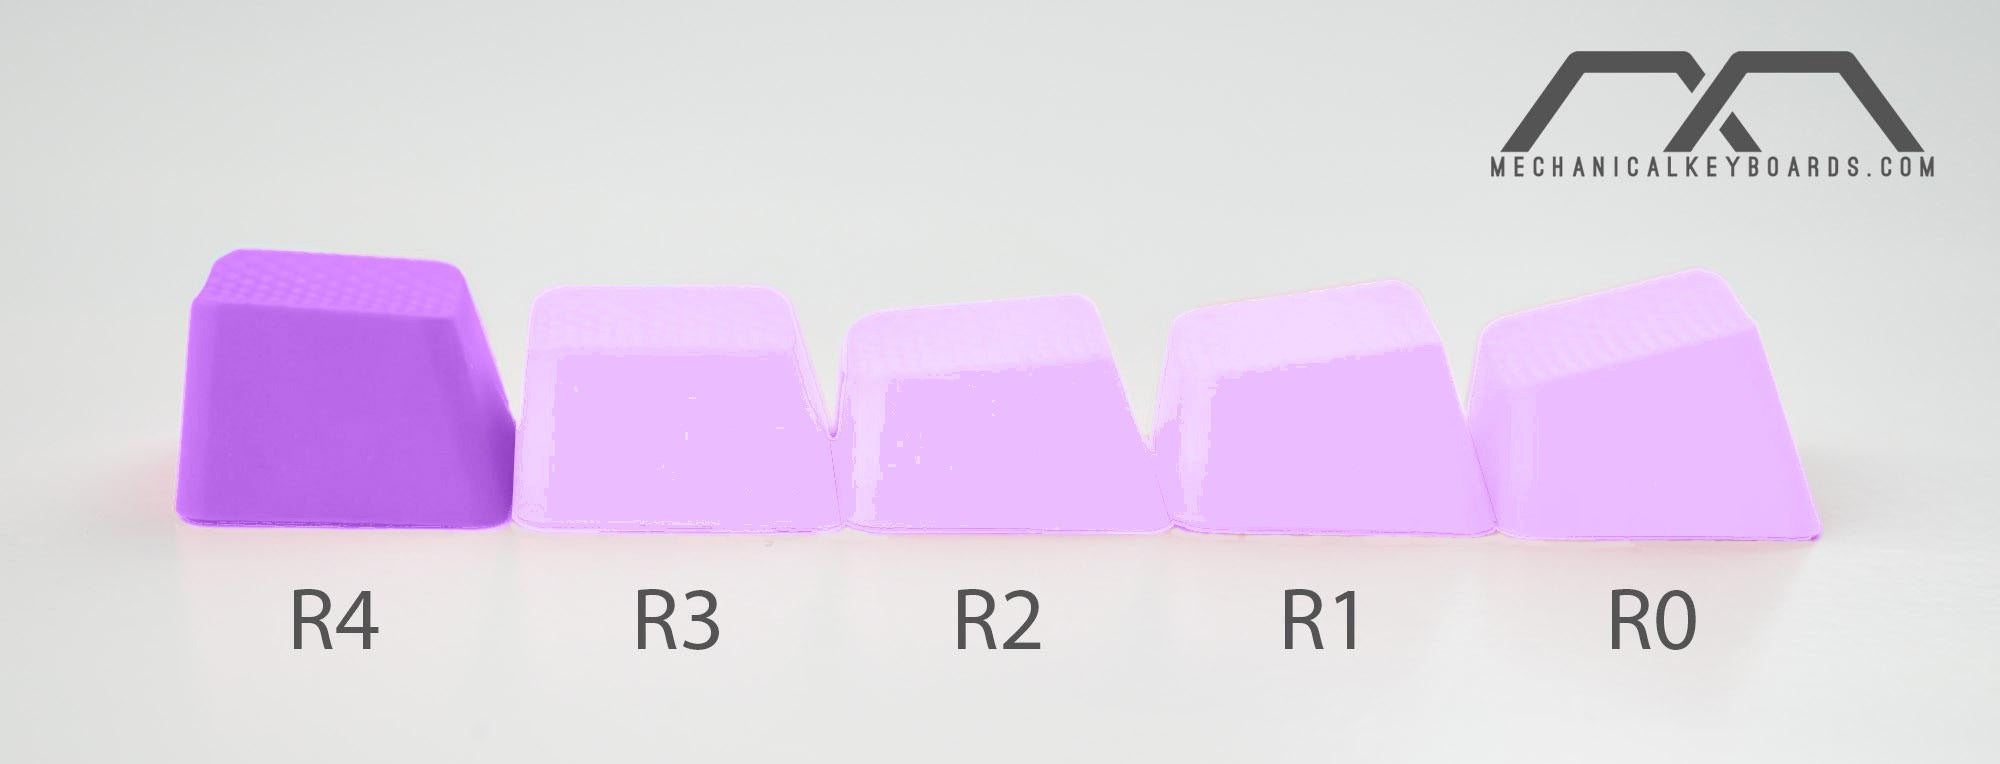 Tai-Hao 4 Key TPR Blank Rubber Keycap Set MK Purple Row 4 MK1KXKSYB4 |0|